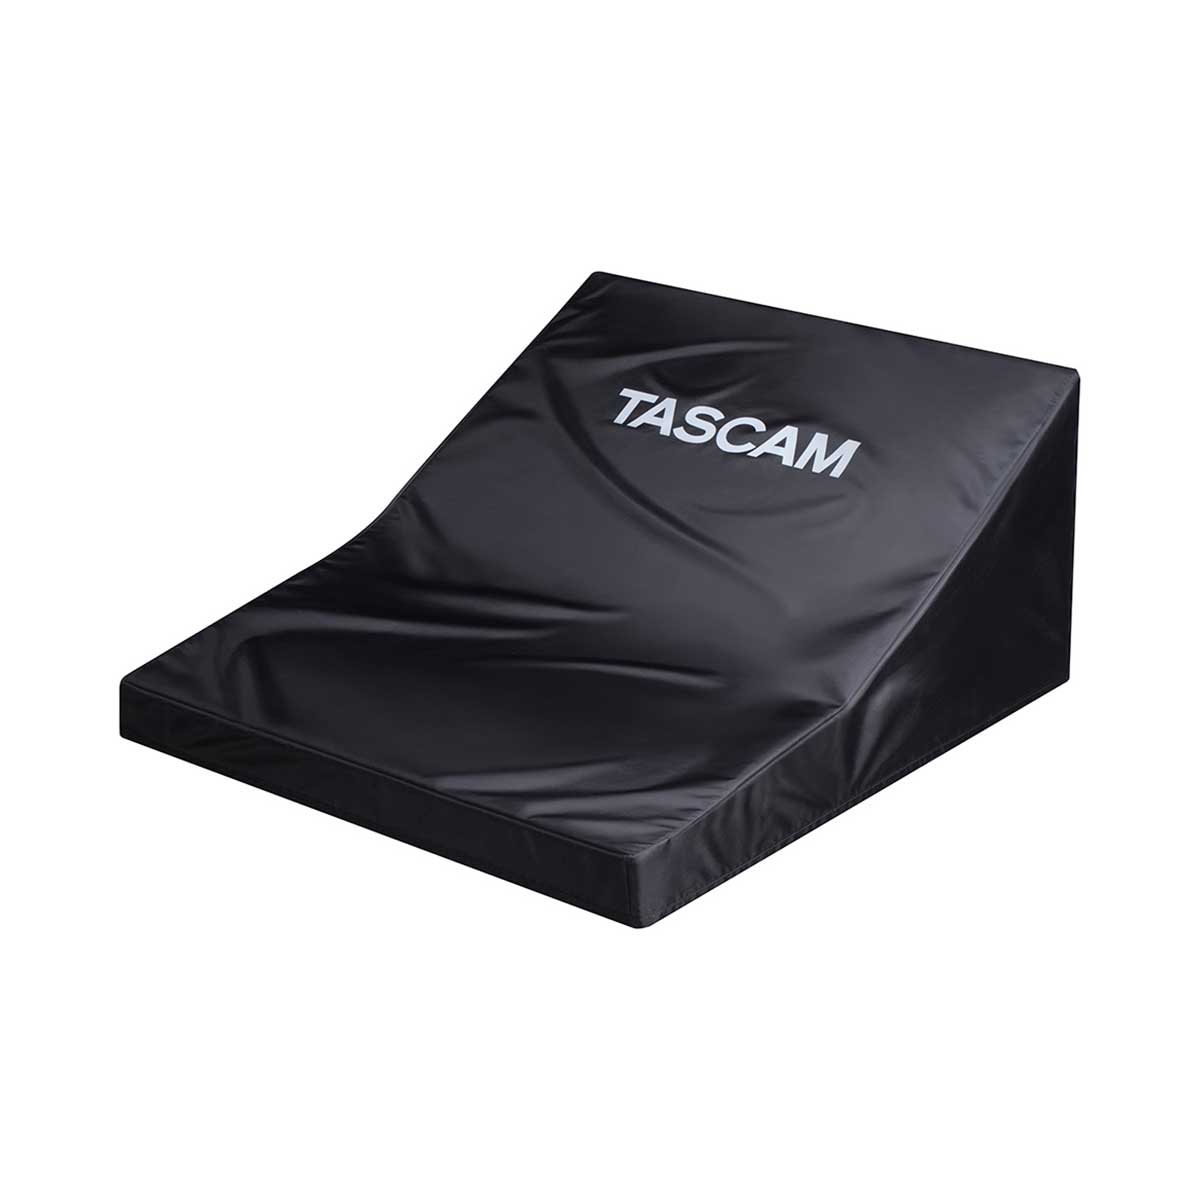 Tascam AK-DCSV16 Dust cover for TASCAM Sonicview 16